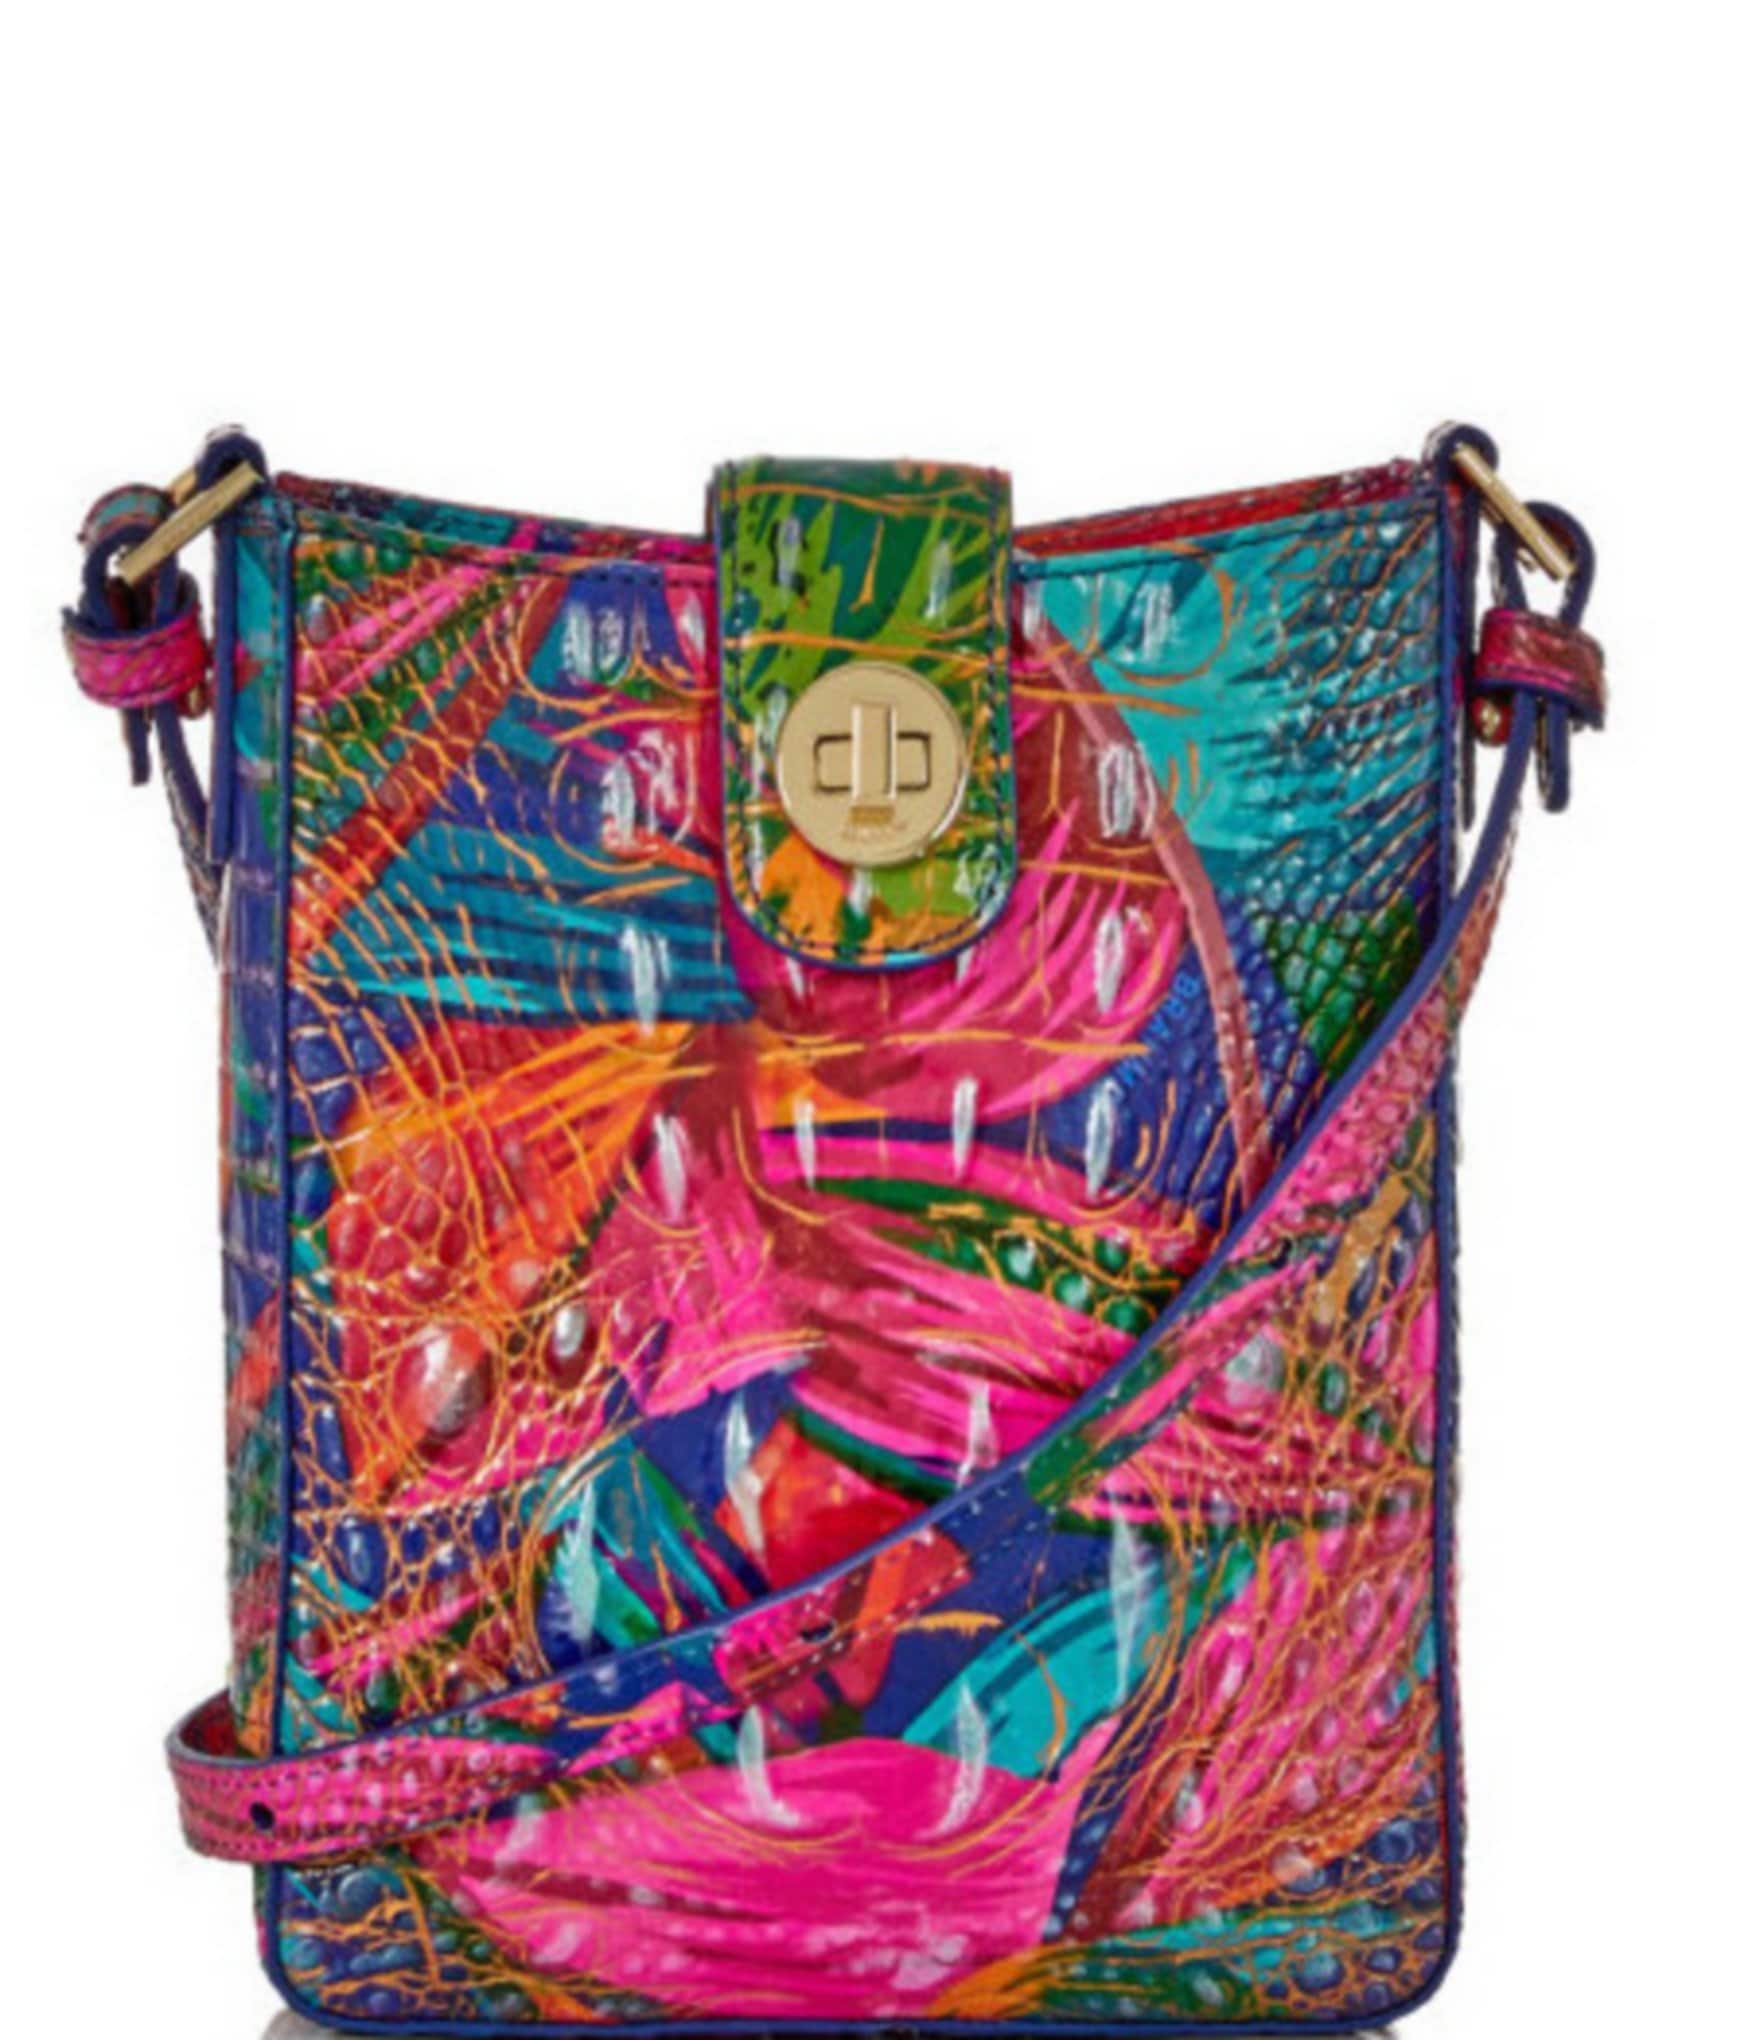 BRAHMIN Melbourne Collection Lorelei Deep Azure Shoulder Bag